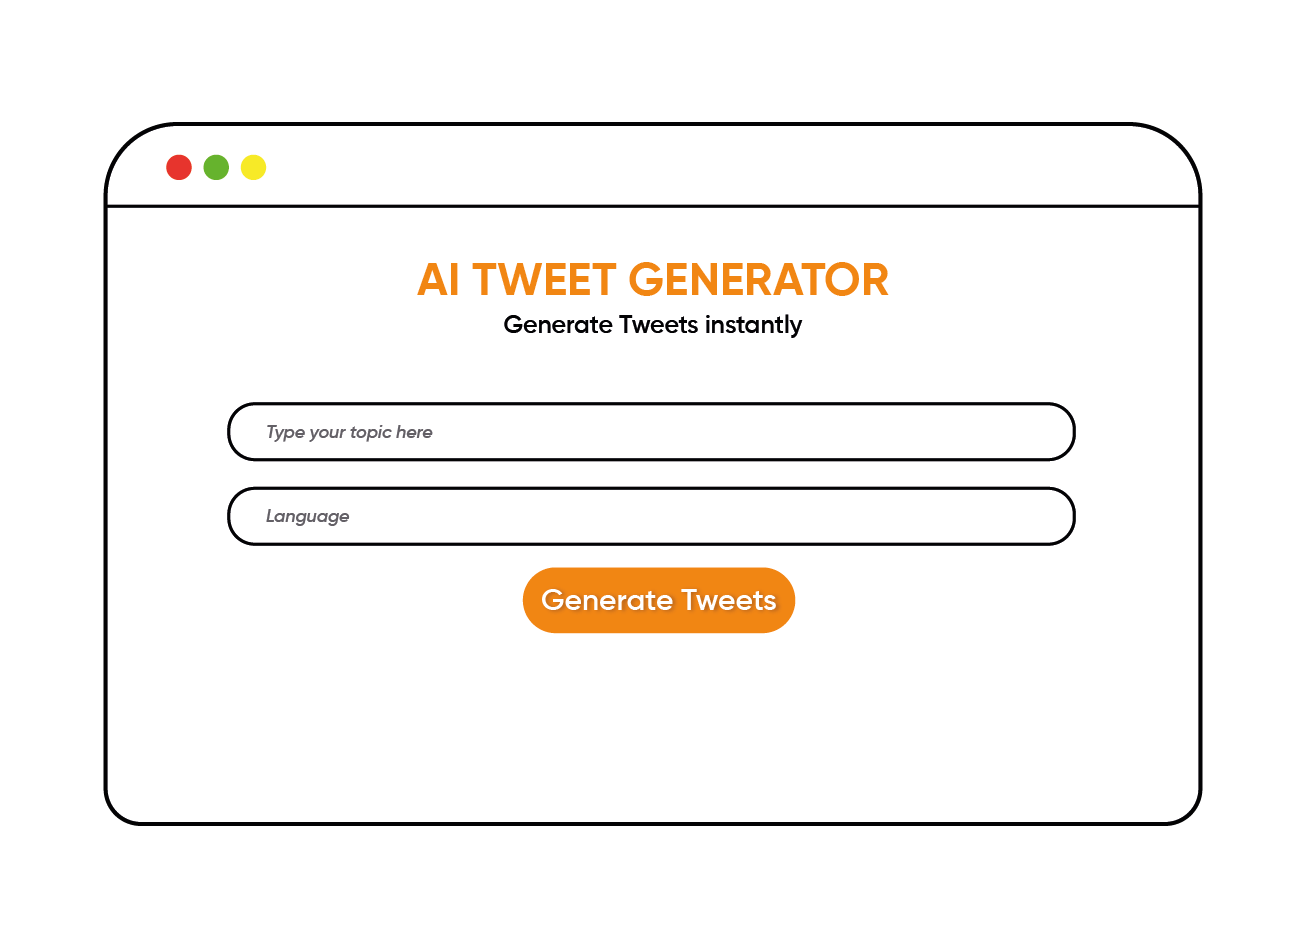 How to Use AI Tweet Generator?